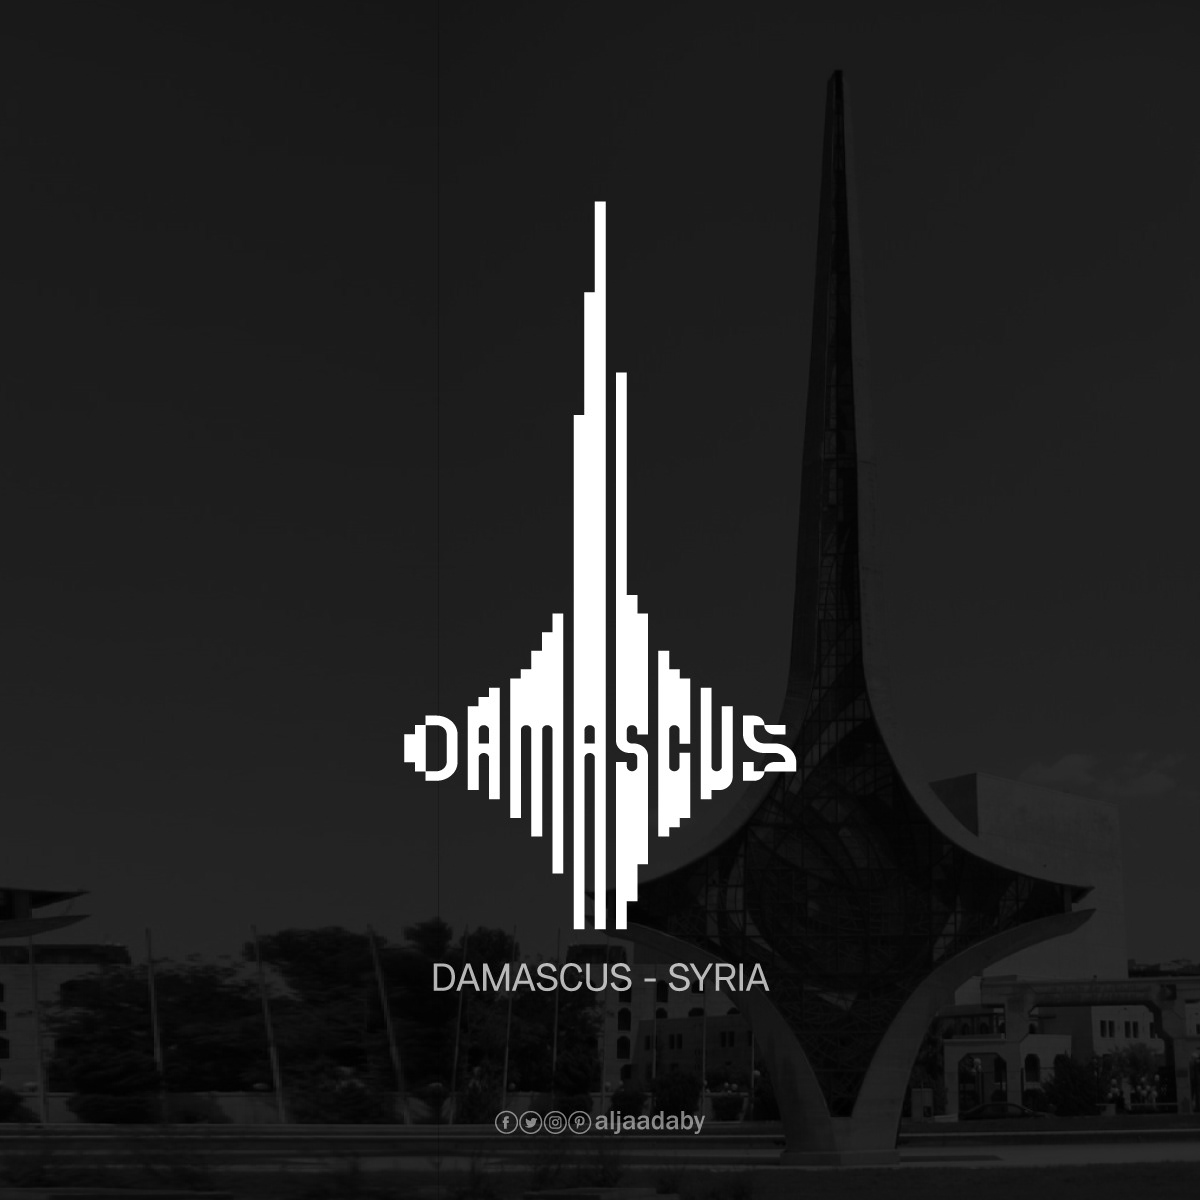 Typographic city logos based on their famous landmarks - Damascus